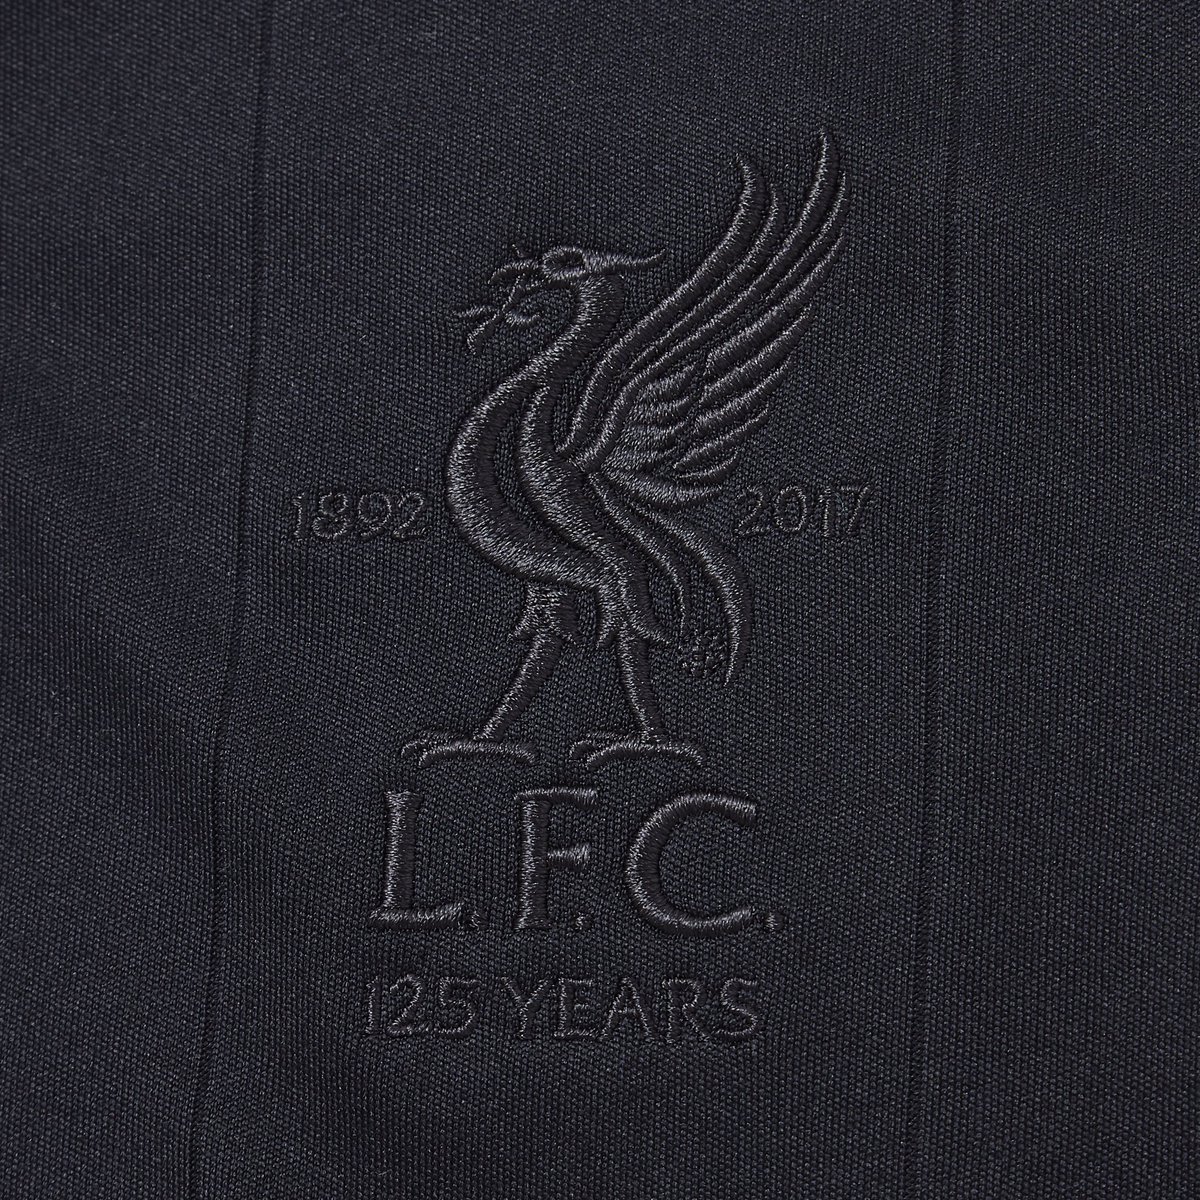 Liverpool 2017 New Balance Pitch Black Shirt | 17/18 Kits | Football ...